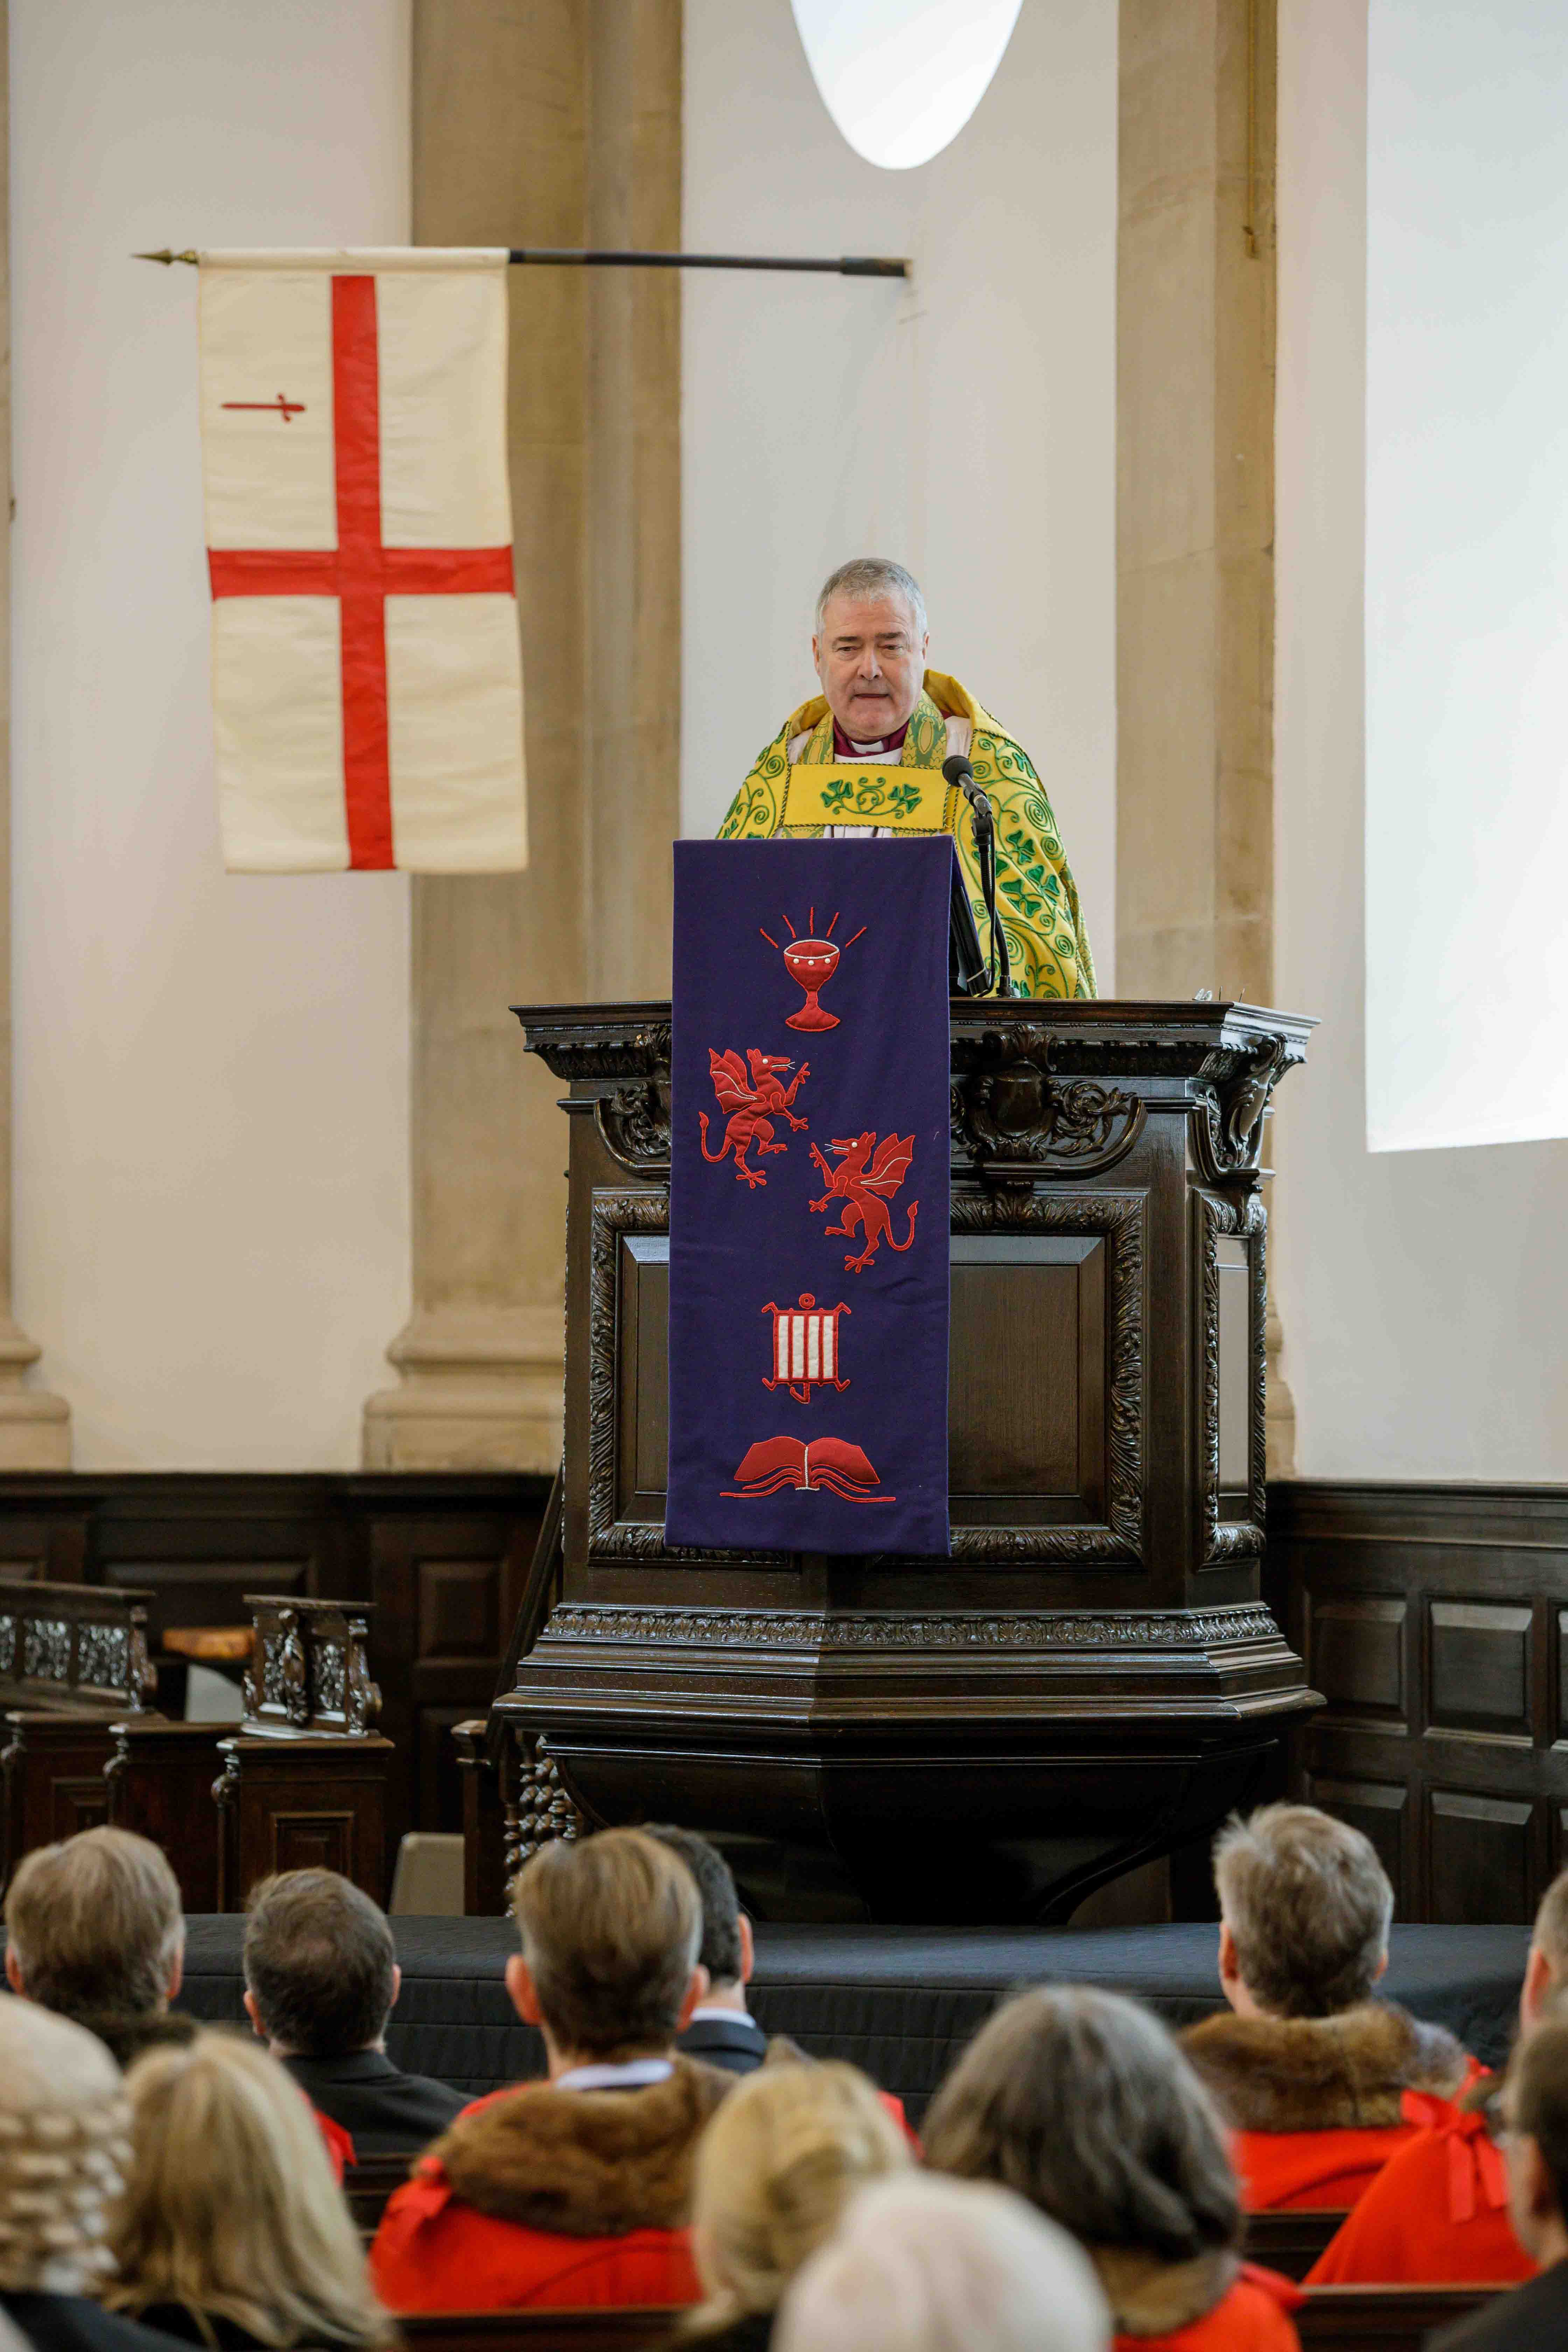 Archbishop John preaching. Credit: Gerald Sharp Photography.